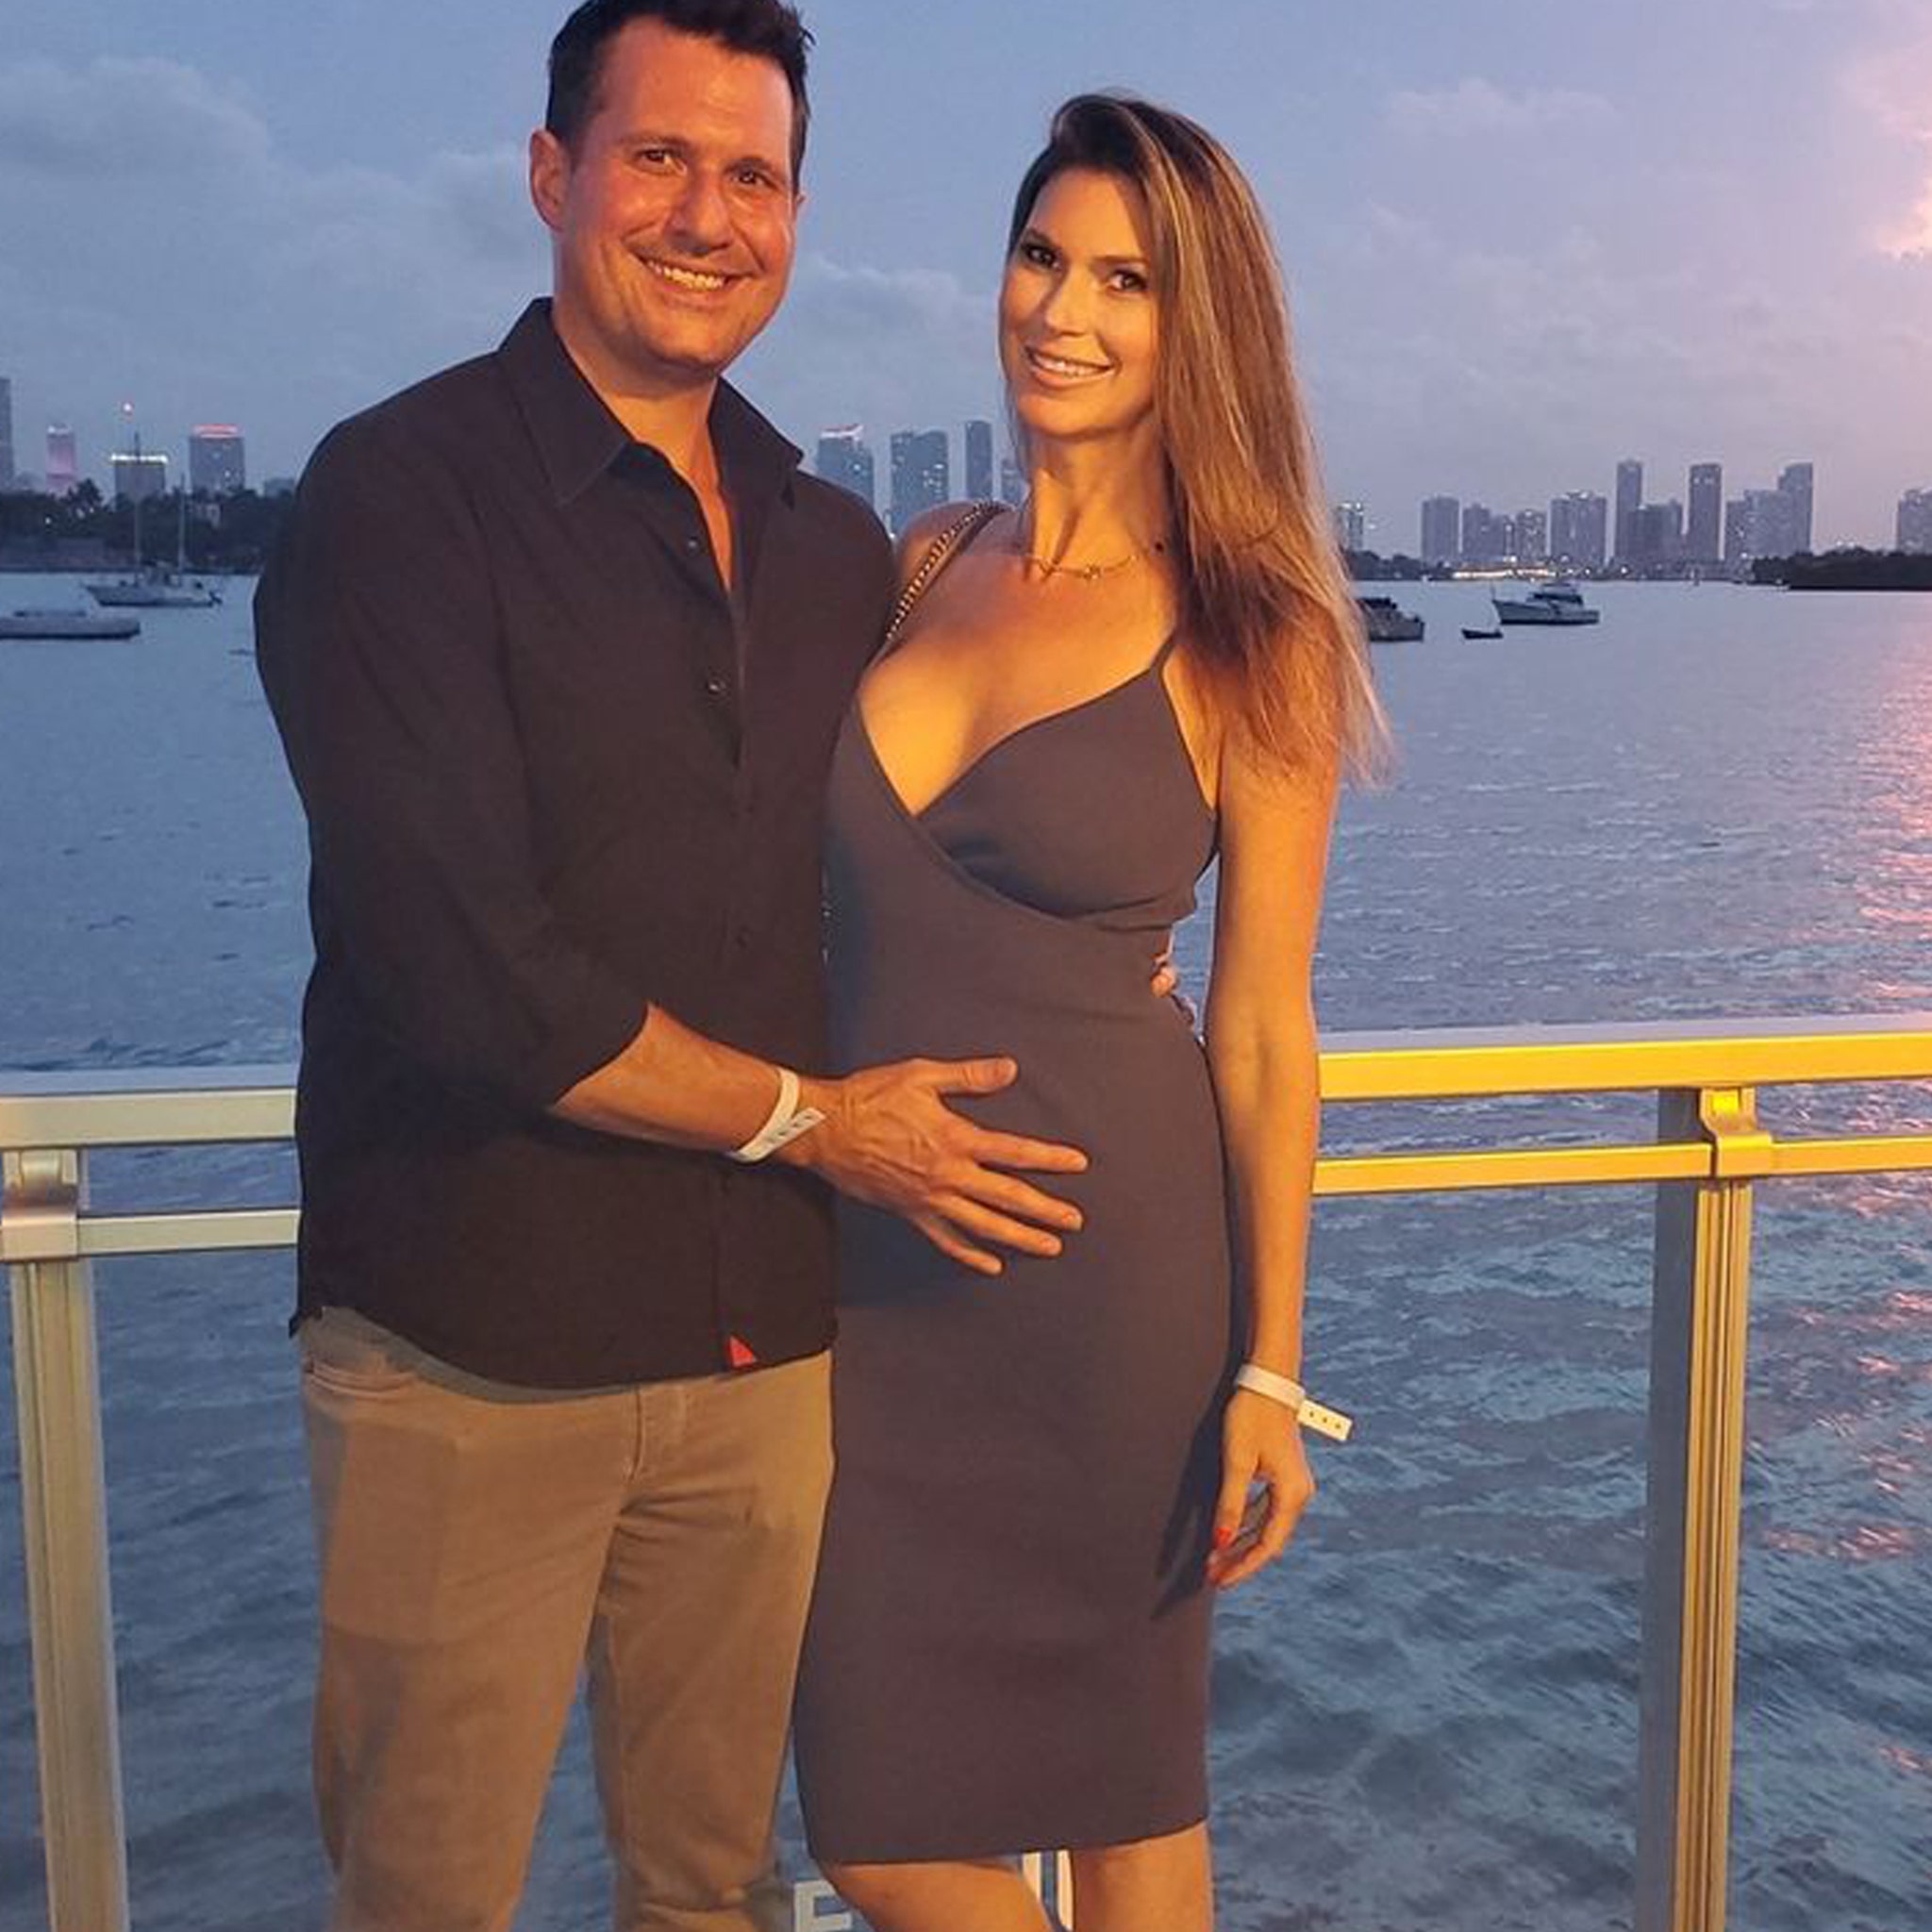 Selling Sunset's Maya Vander Shares She Had a Stillbirth 38 Weeks Into Pregnancy